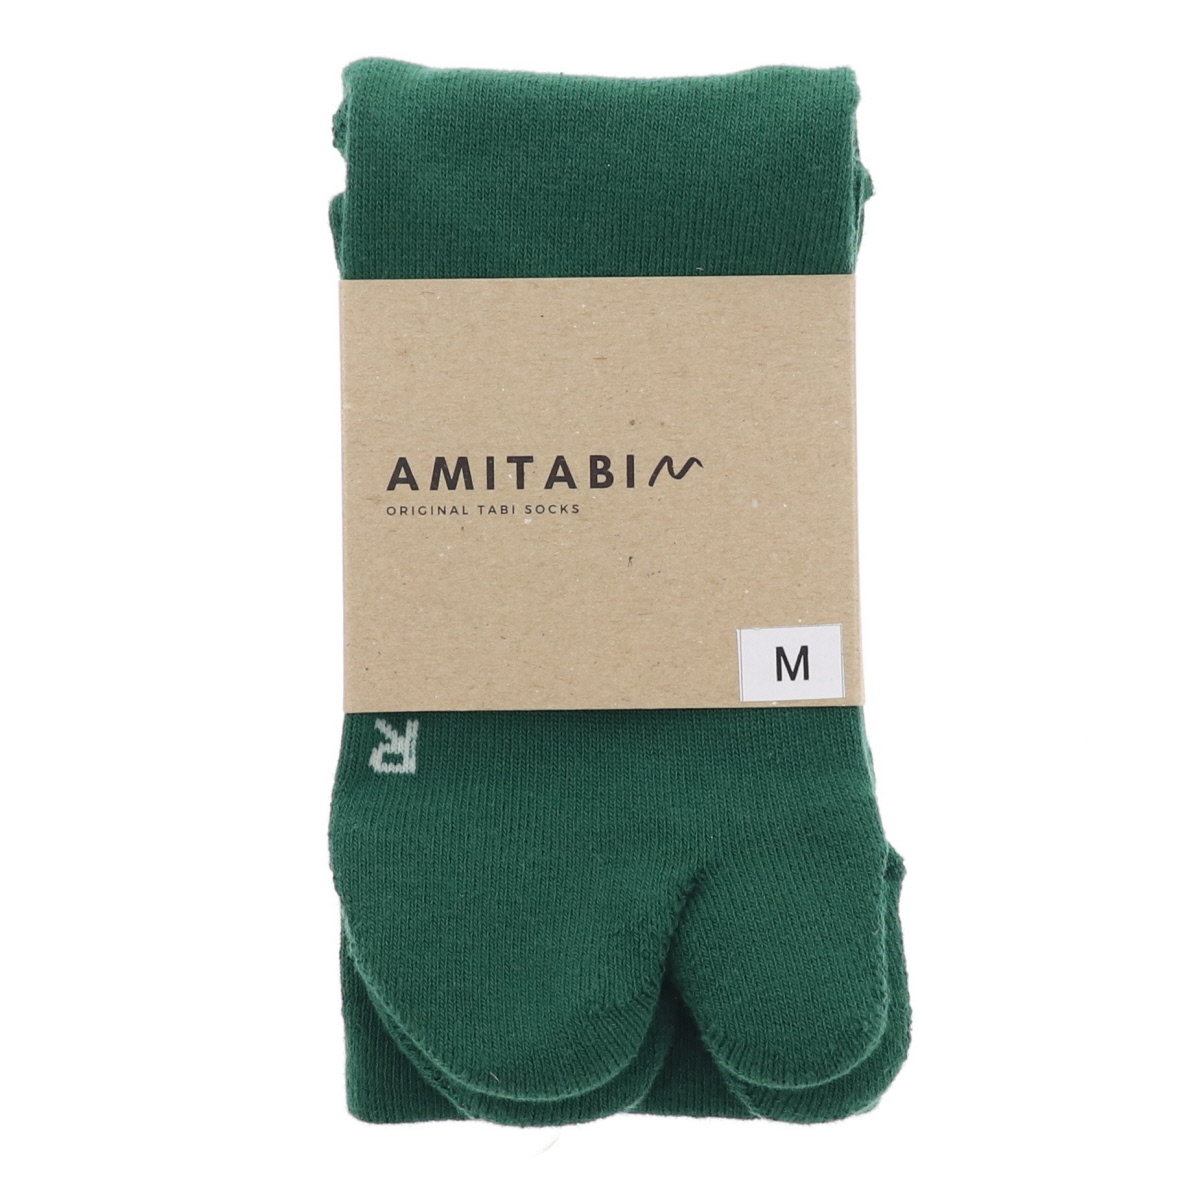 AMITABI アミタビソックス ベーシック AT0002 レディース ソックス 靴下 足袋 たび ...